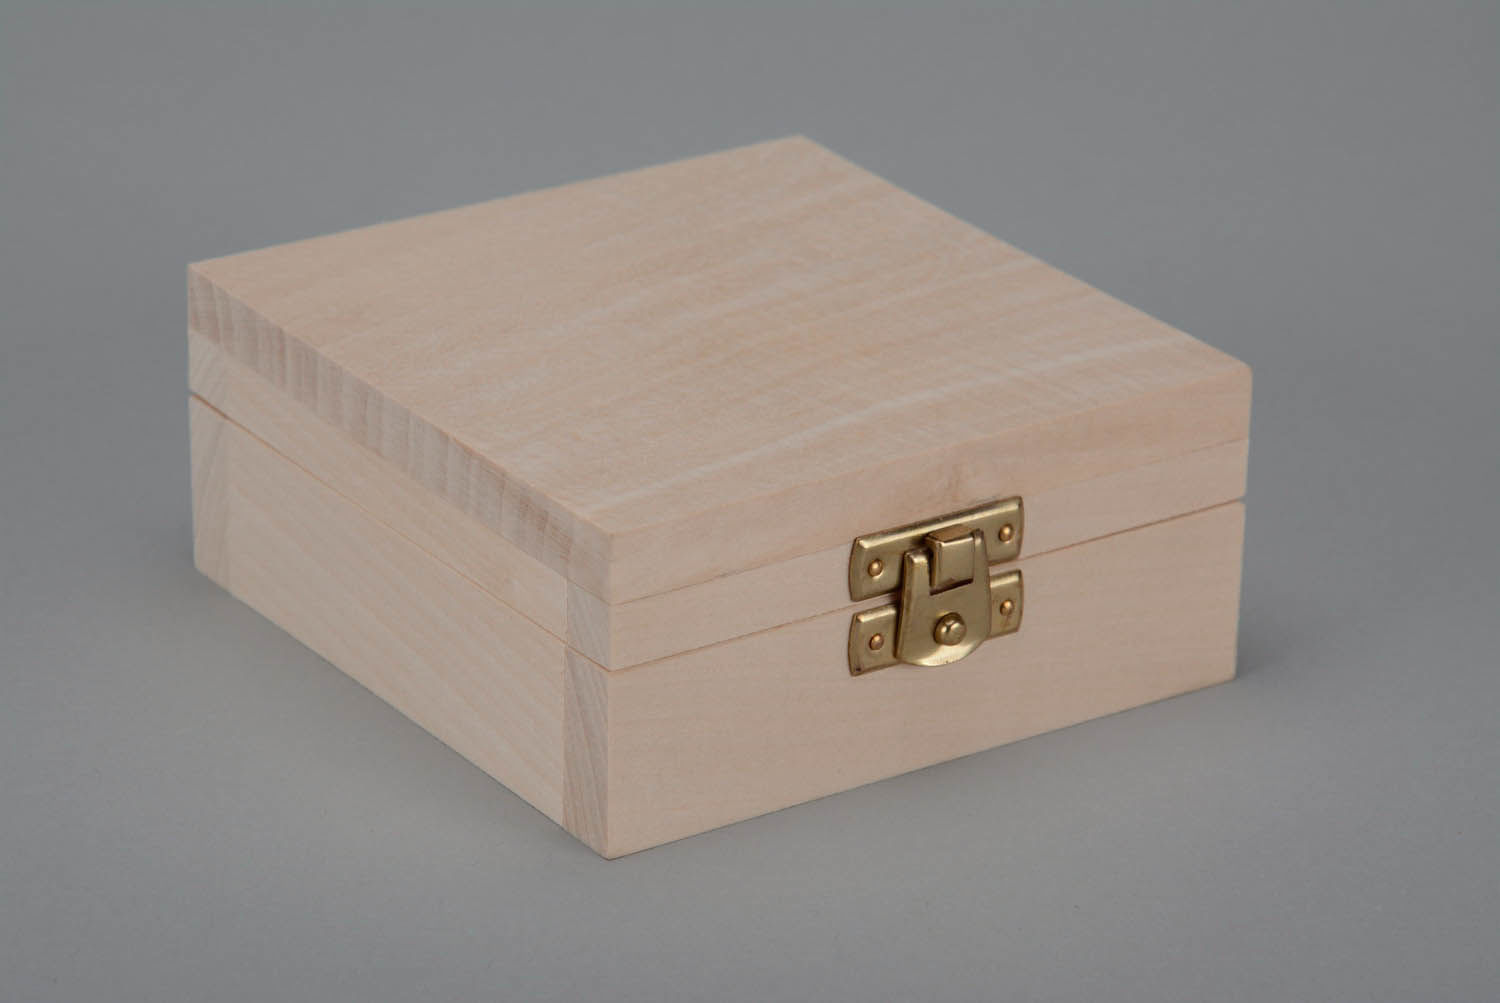 Caja de madera con acabado de terciopelo por dentro foto 1